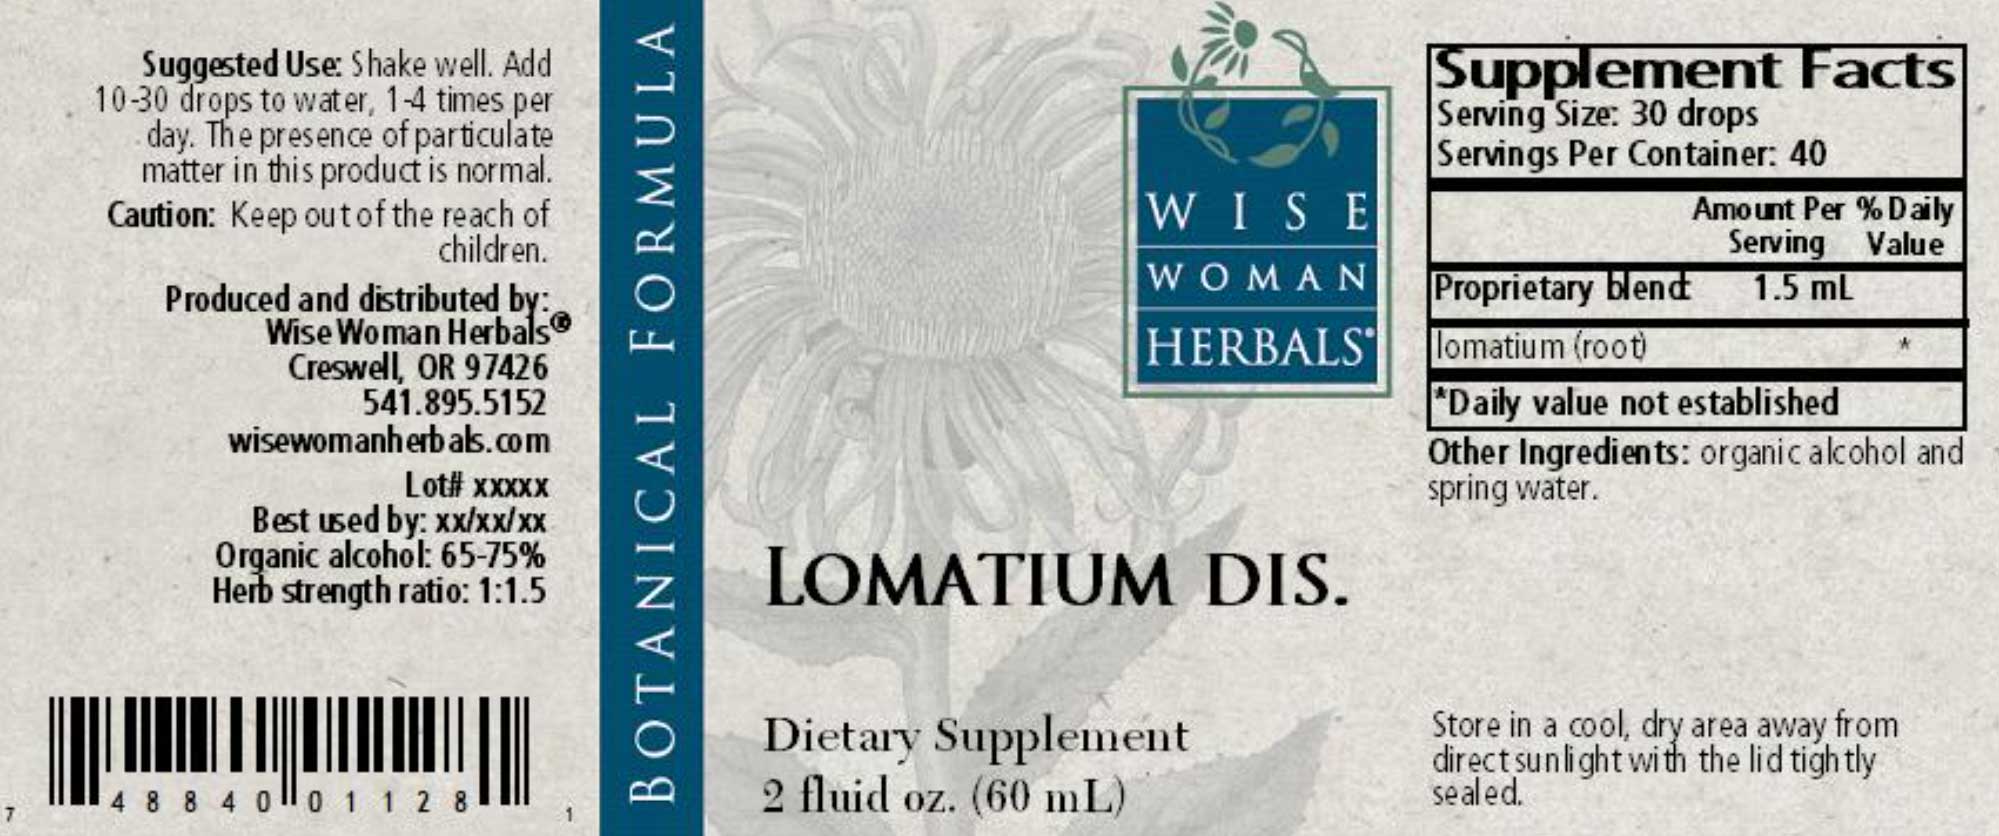 Wise Woman Herbals Lomatium Disectum Label